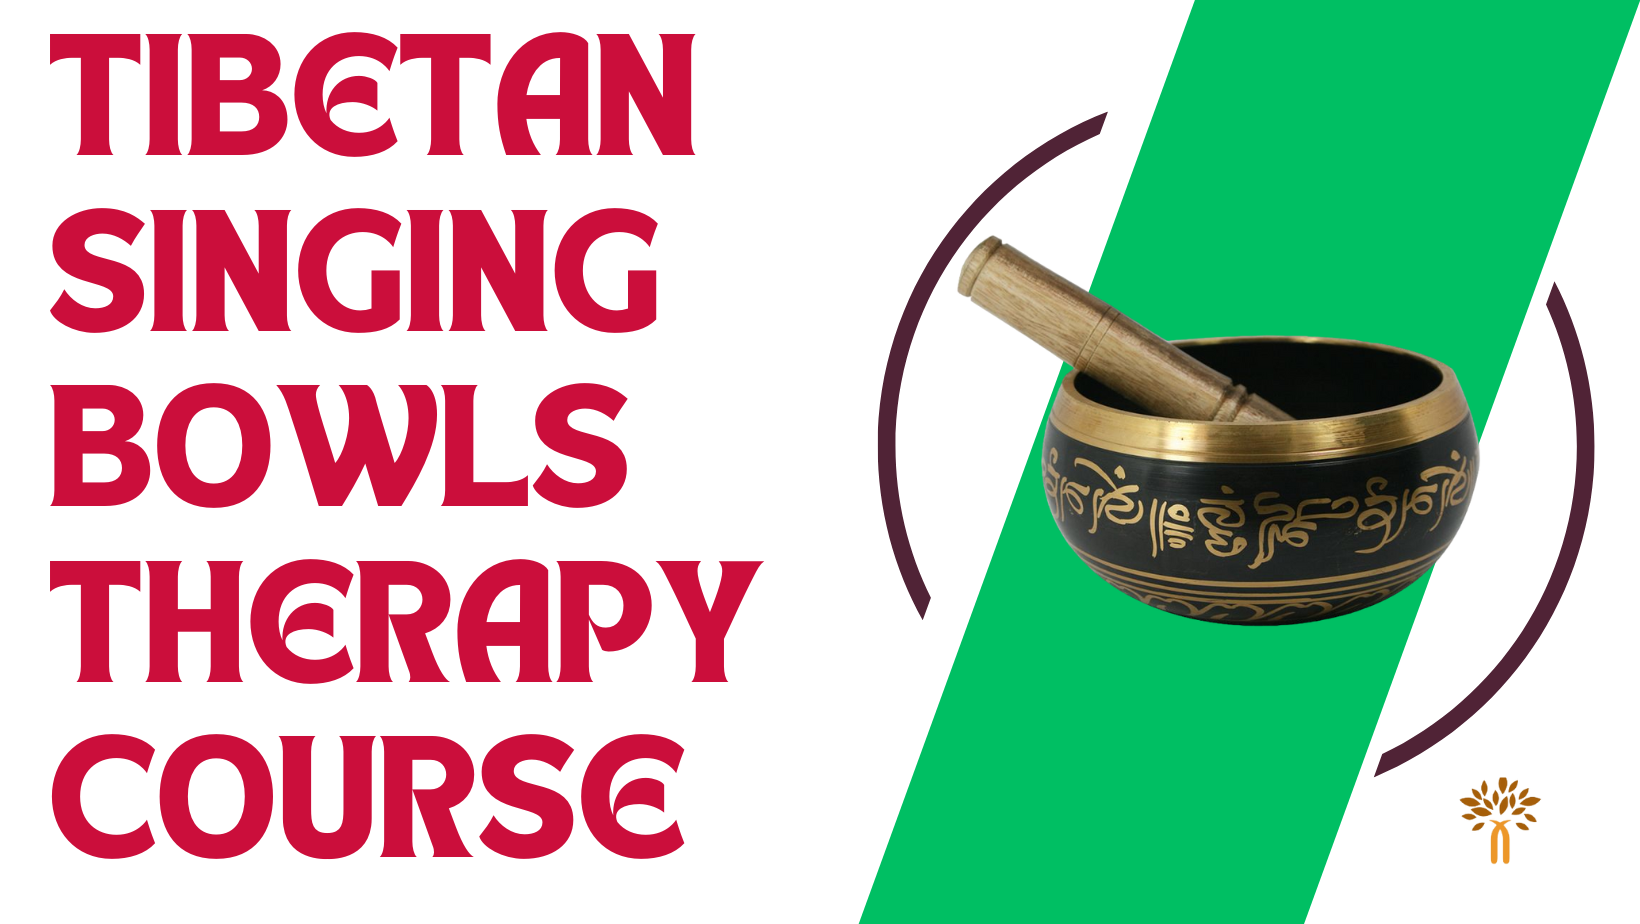 Tibetan Singing Bowls Therapy Courses in Mumbai